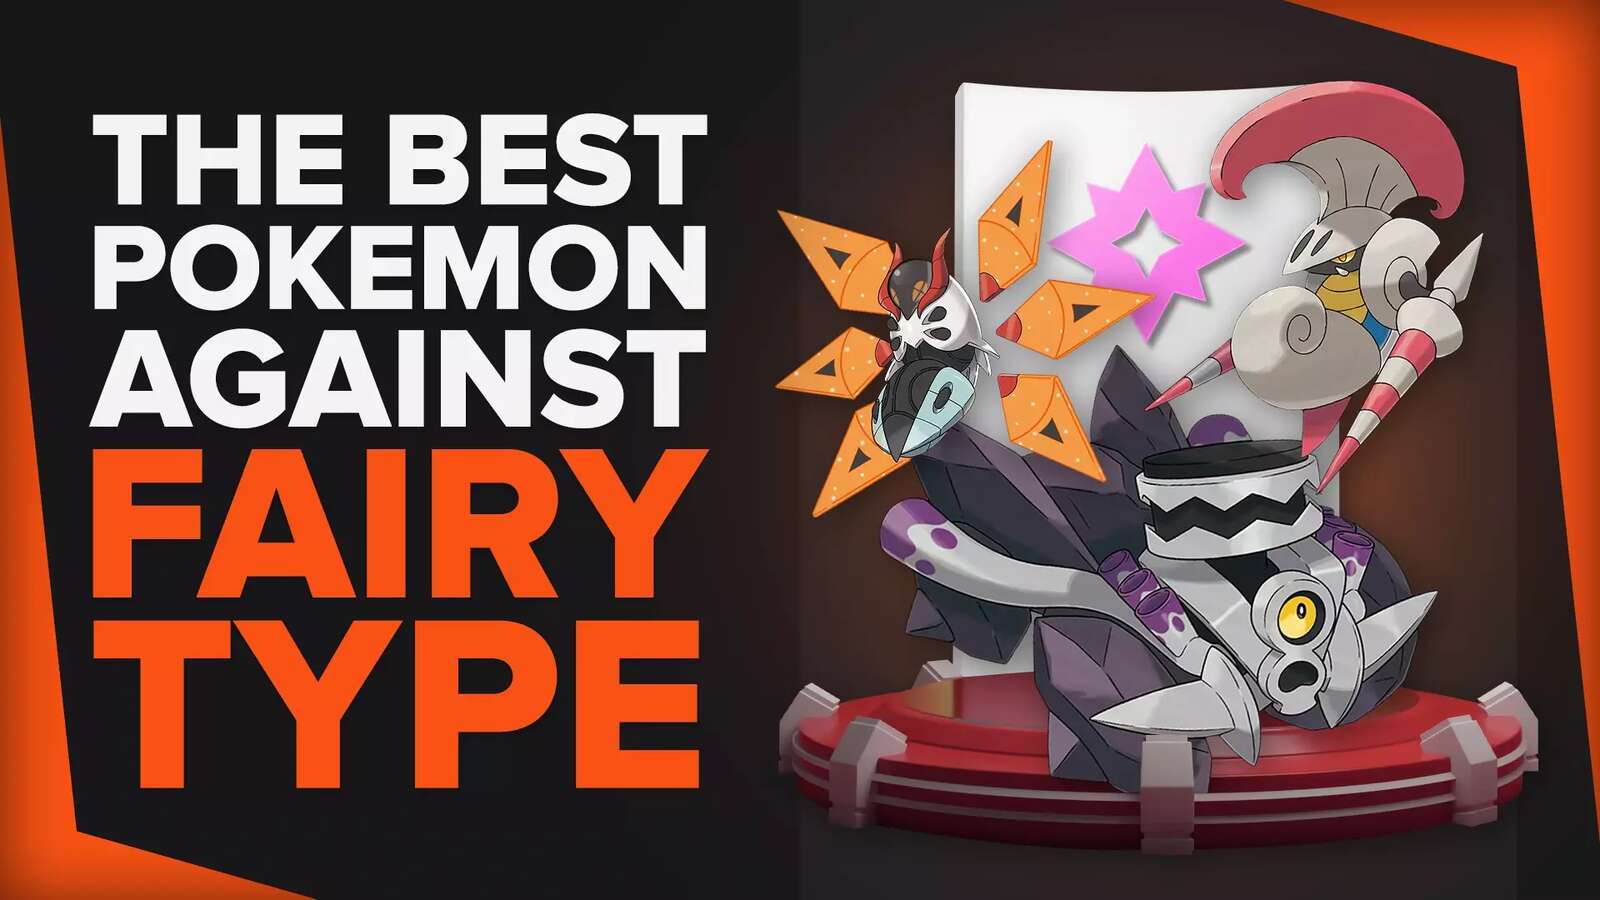 The 10 Pokemon Best Against Fairy Type Pokemon [Ranked]